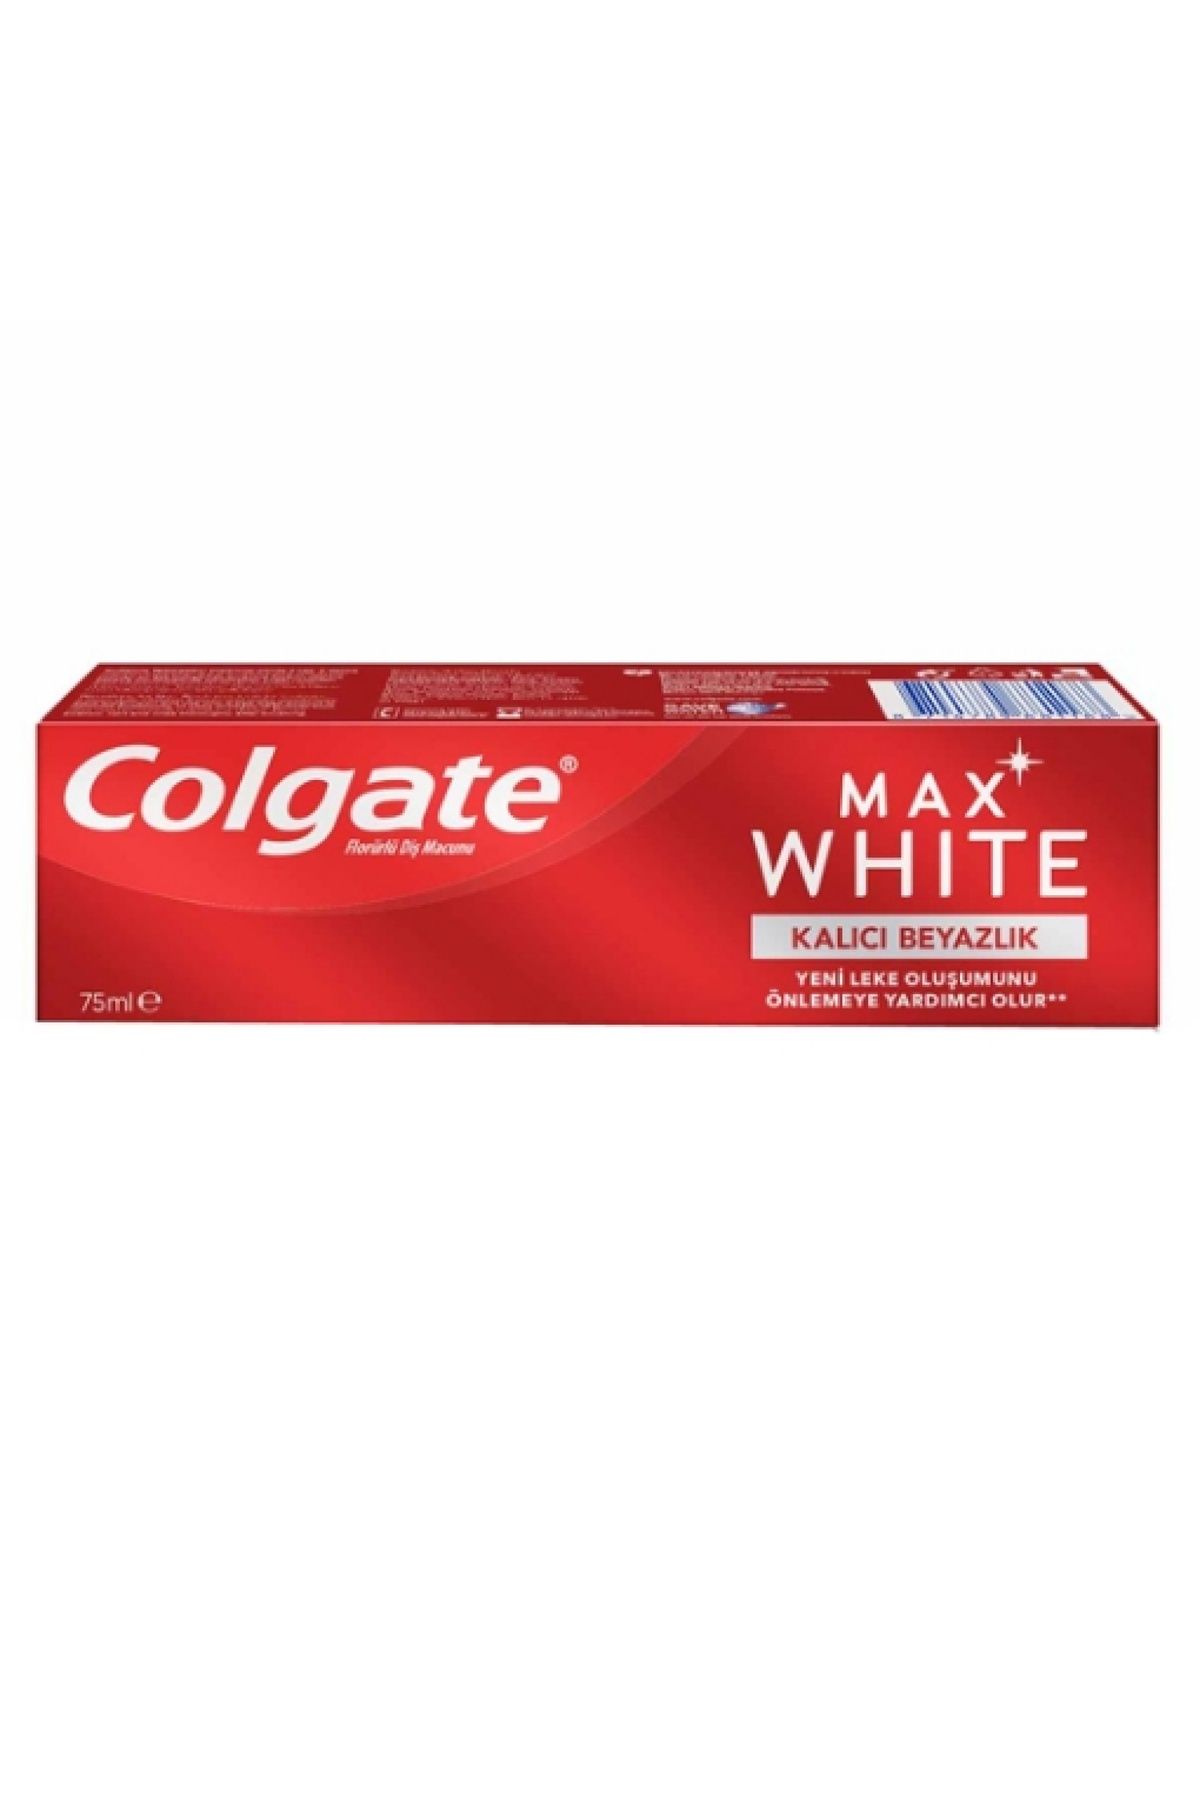 Colgate Max White Kalıcı Beyazlık 75 ml. (12'li)